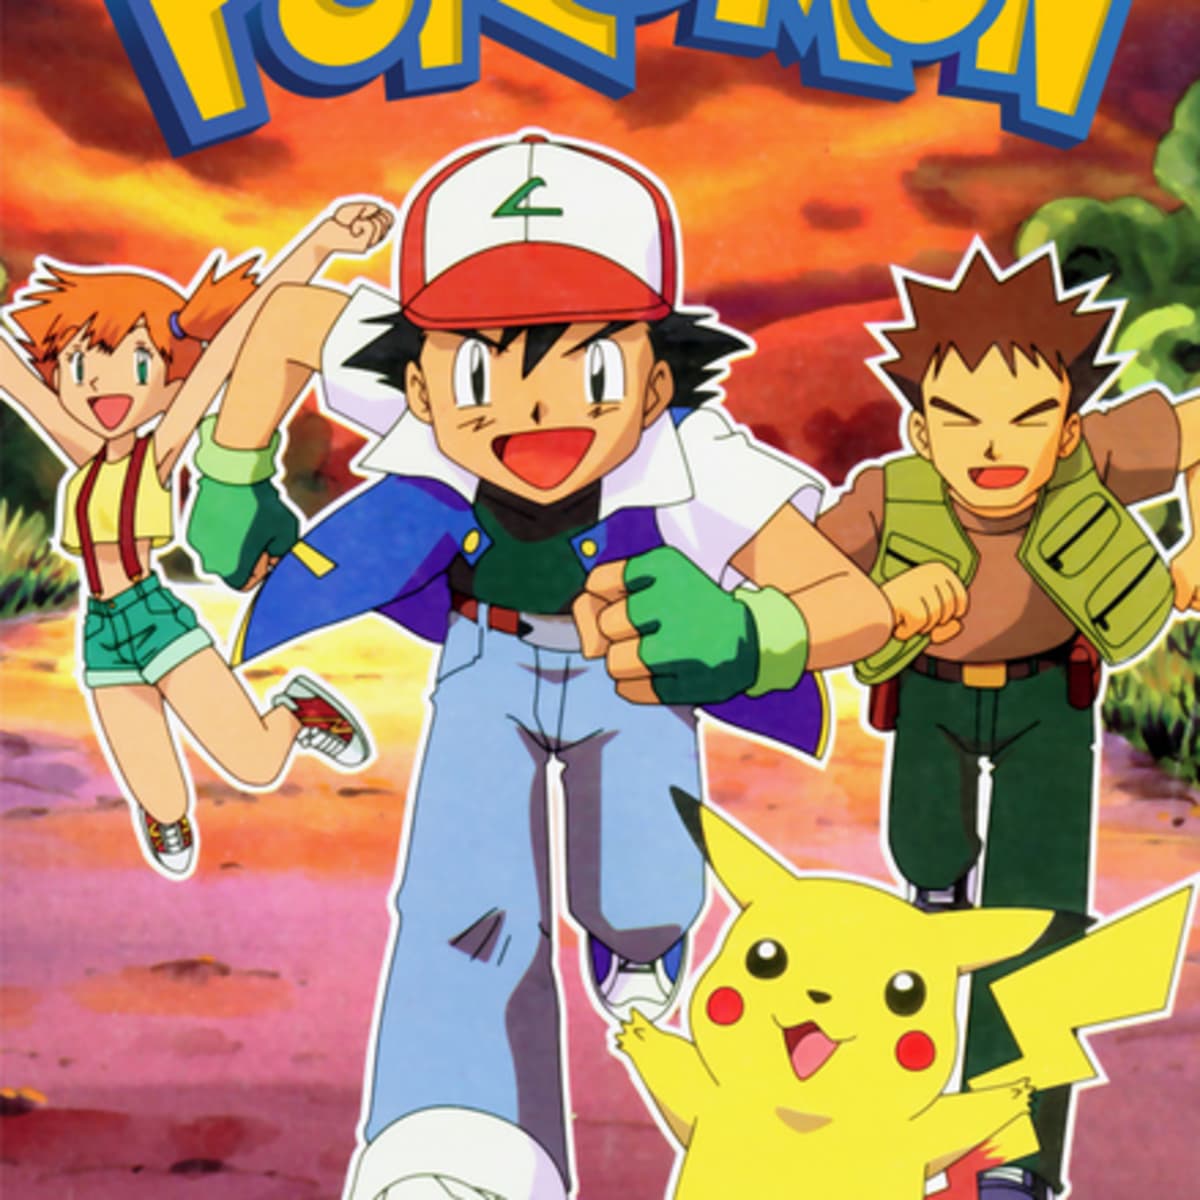 Top 10 Pokemon Films 